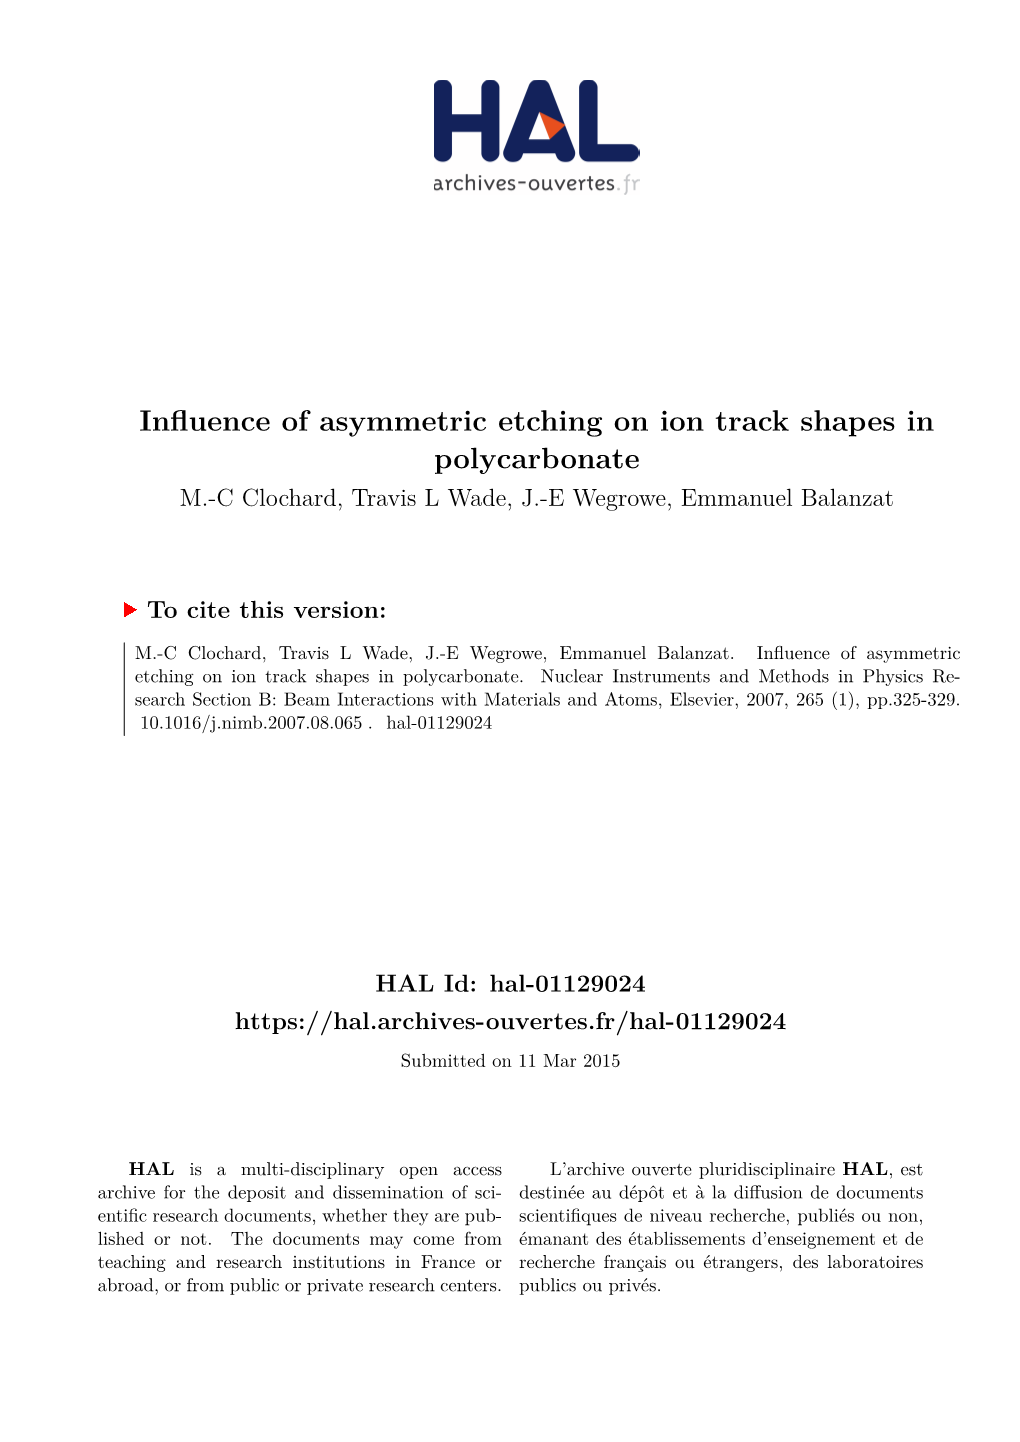 Influence of Asymmetric Etching on Ion Track Shapes in Polycarbonate M.-C Clochard, Travis L Wade, J.-E Wegrowe, Emmanuel Balanzat